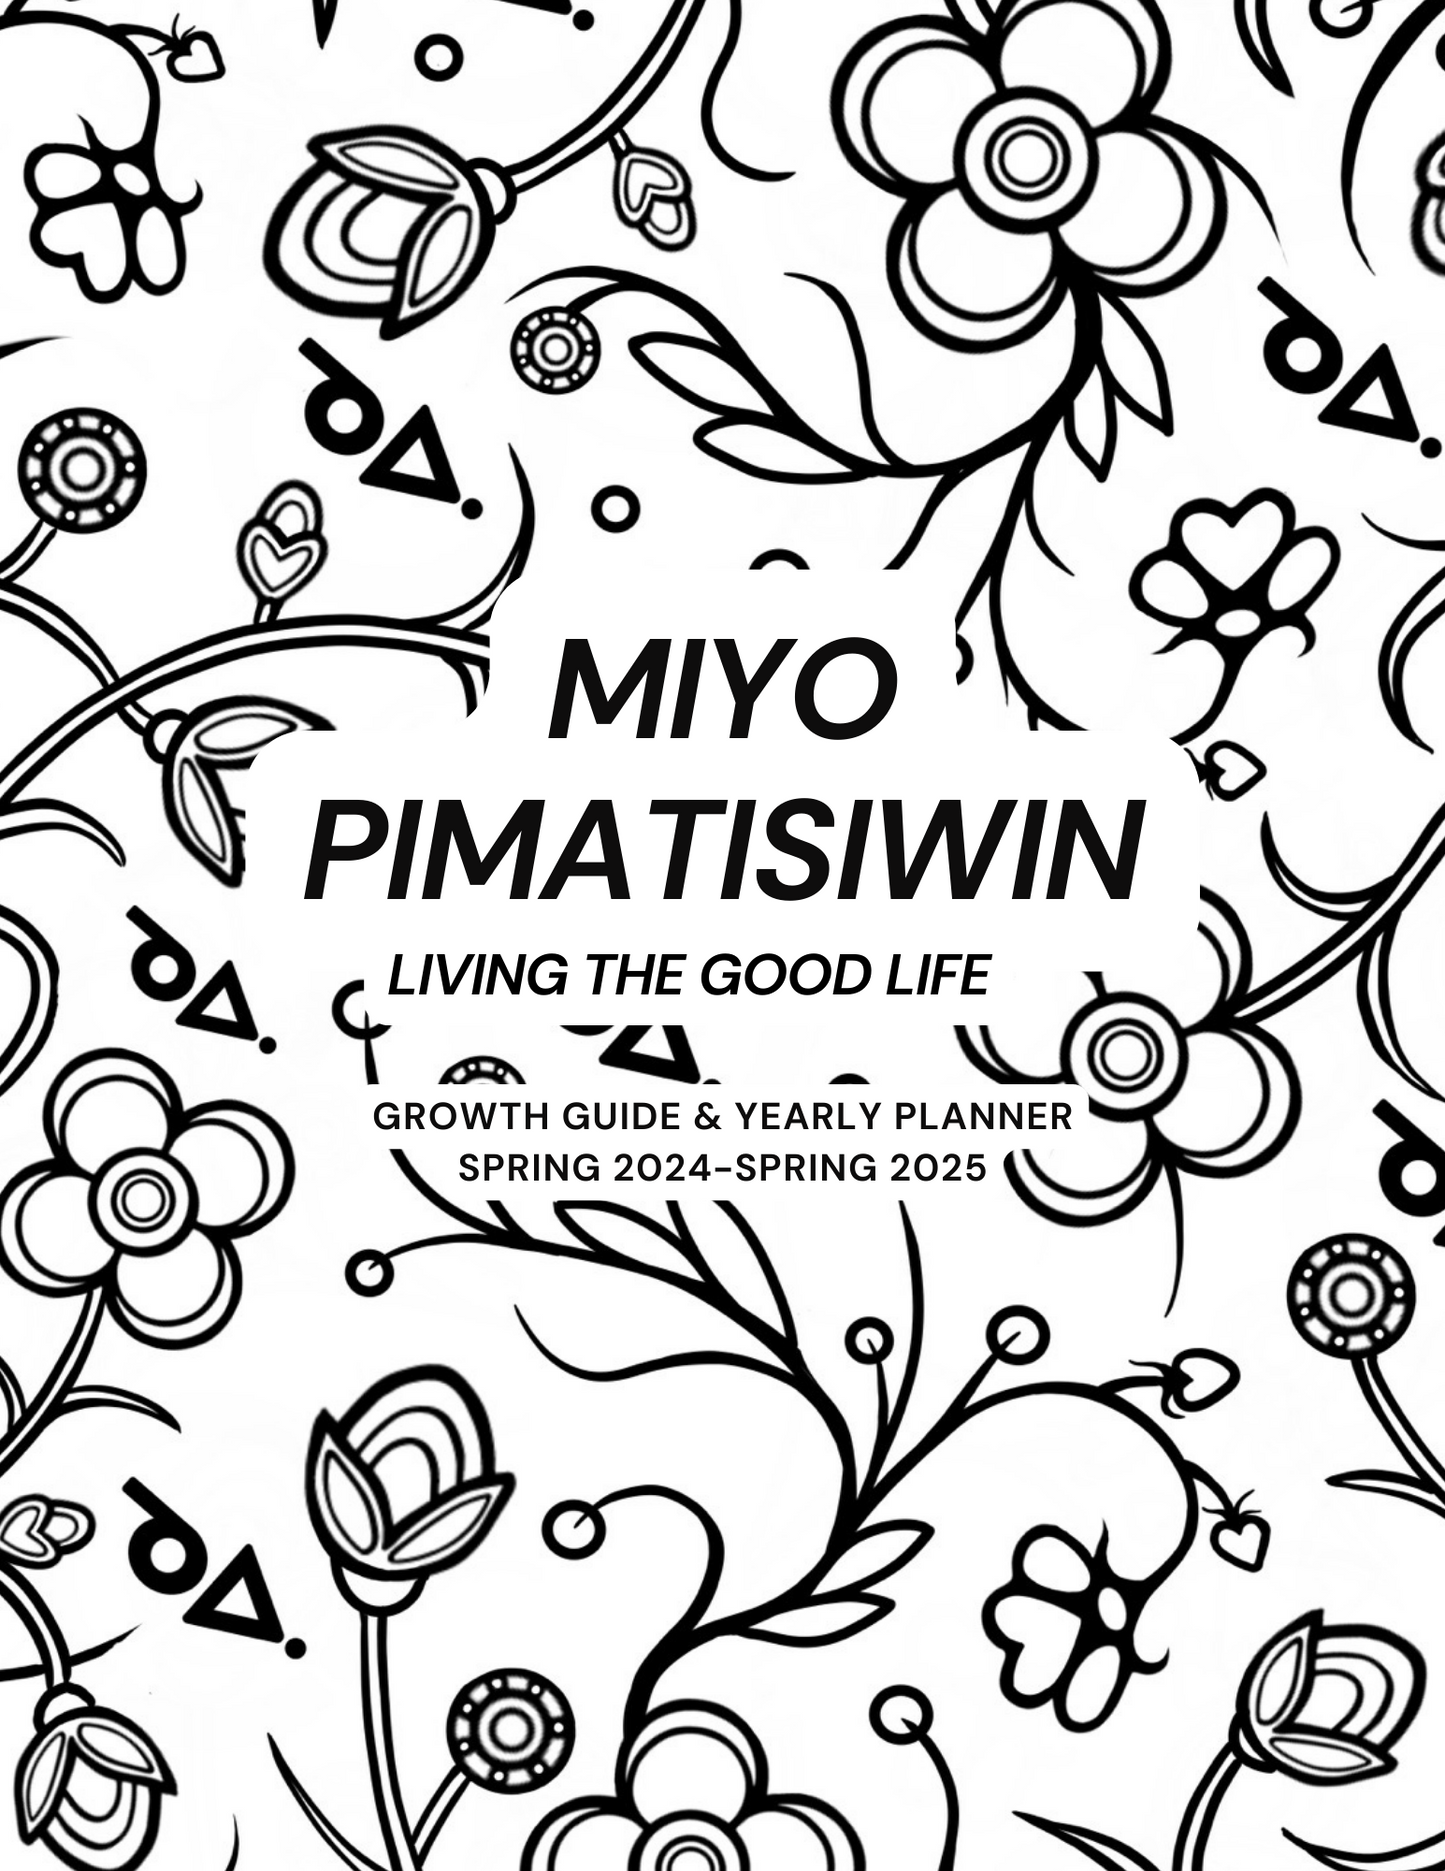 Miyo Pimatisiwin Journal/Planner